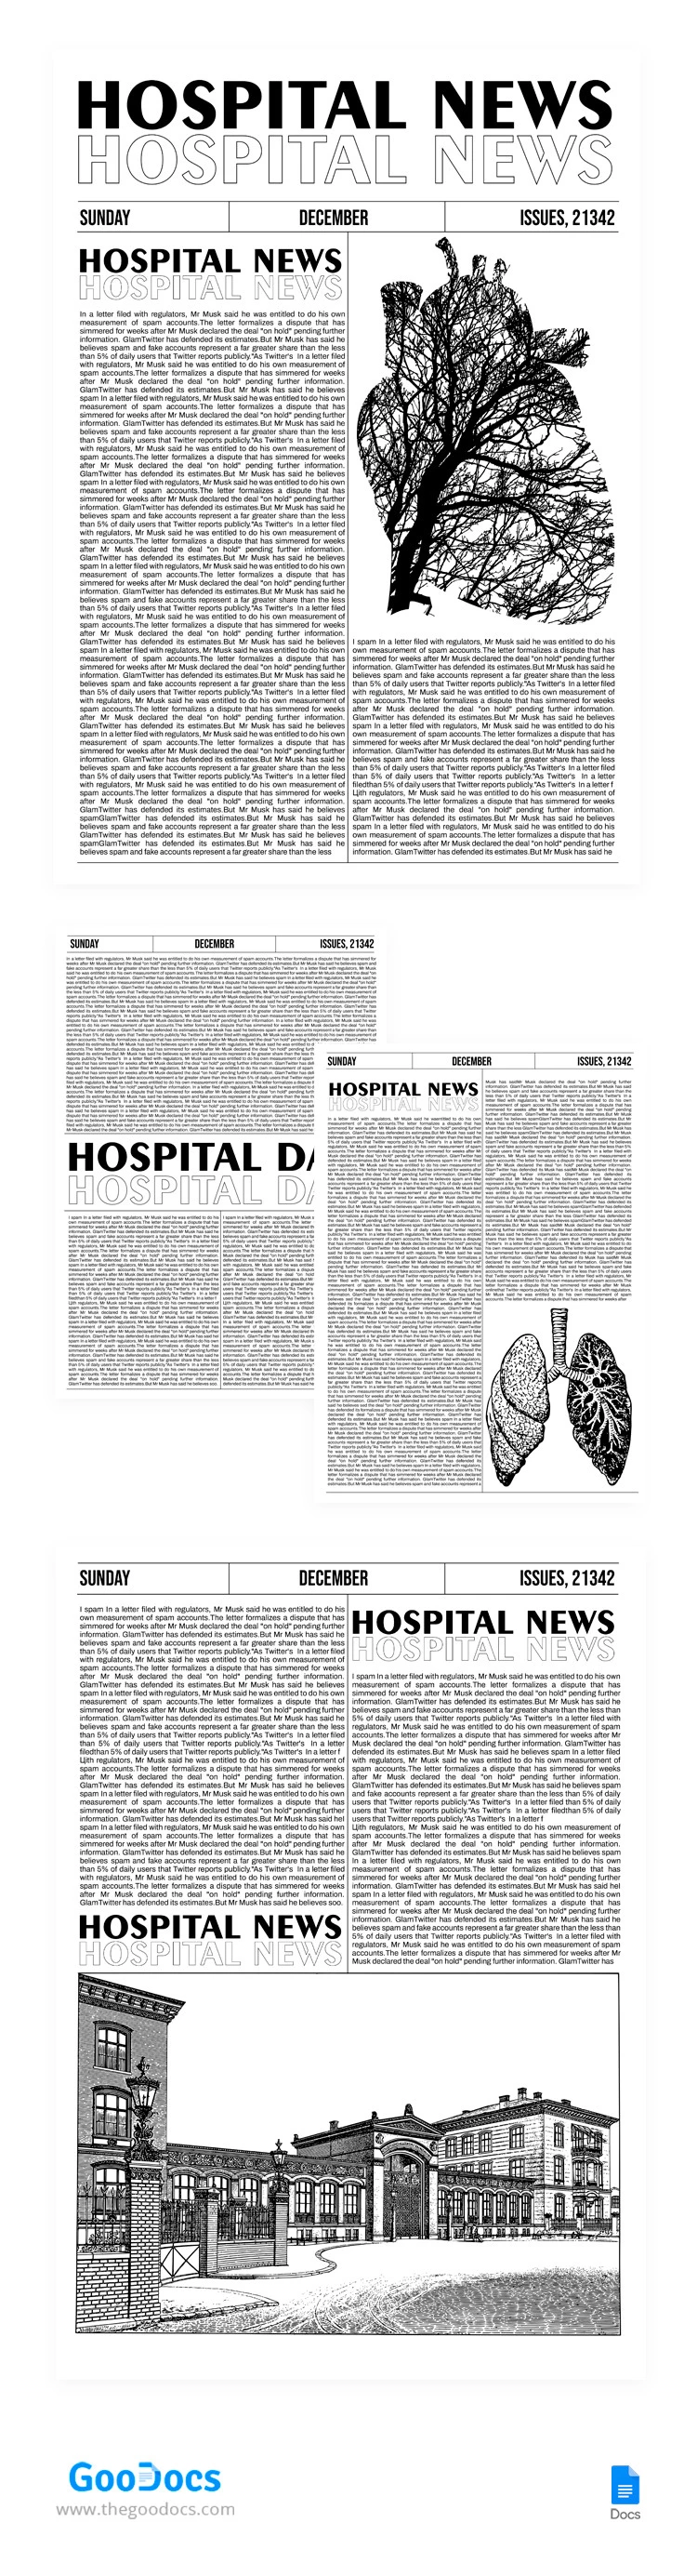 Black & White Newspaper - free Google Docs Template - 10065599